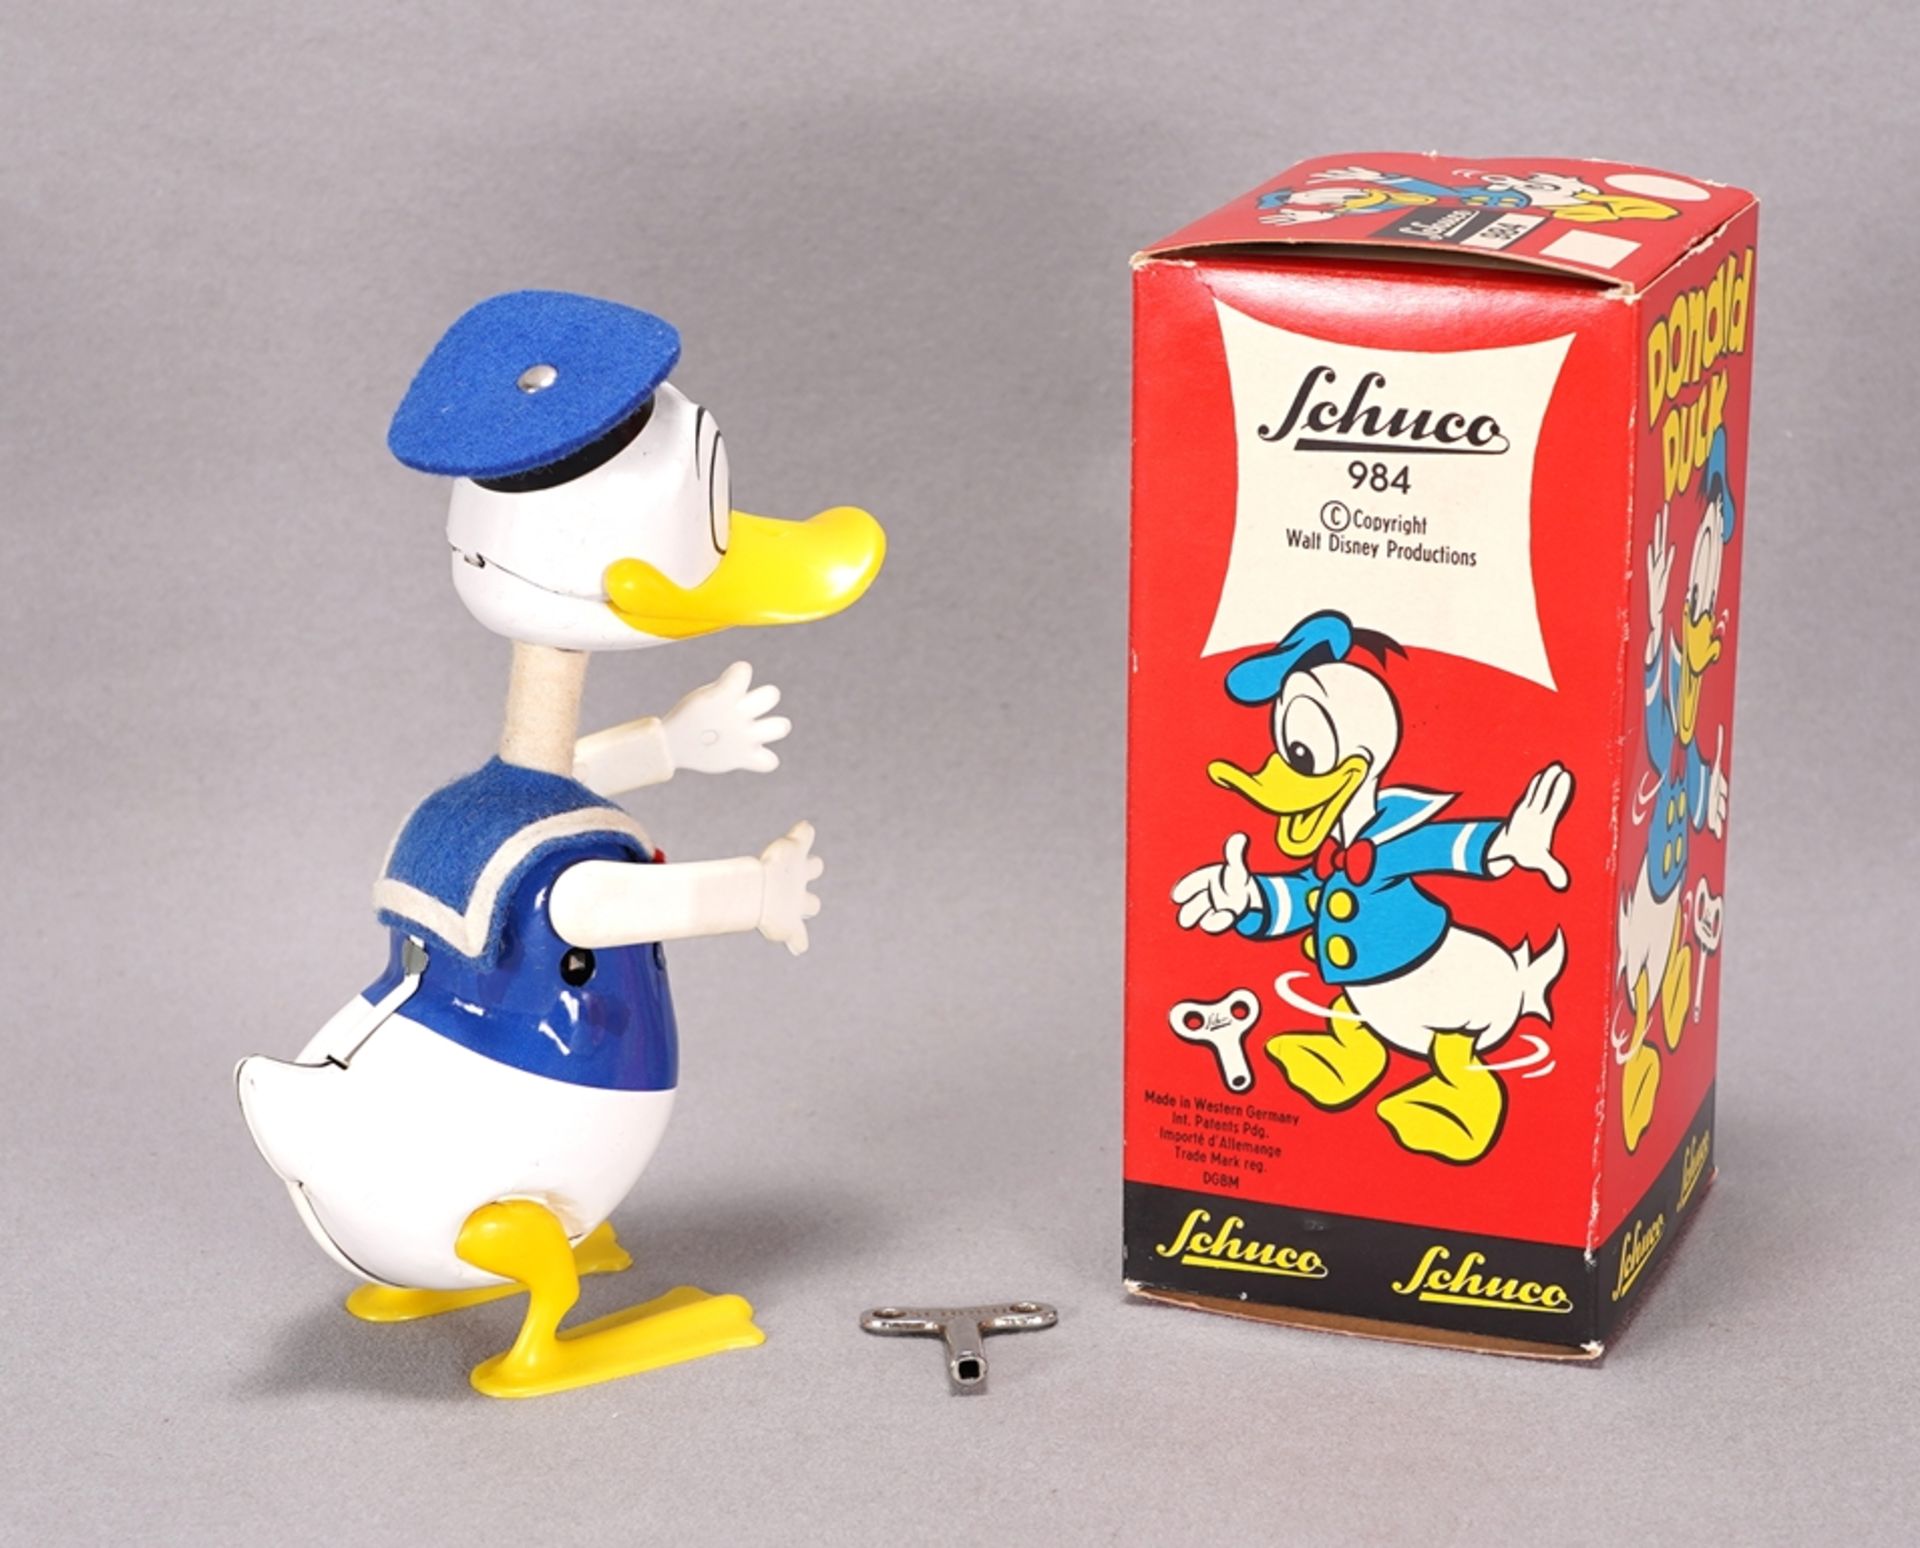 Schuco Donald Duck - Image 3 of 4